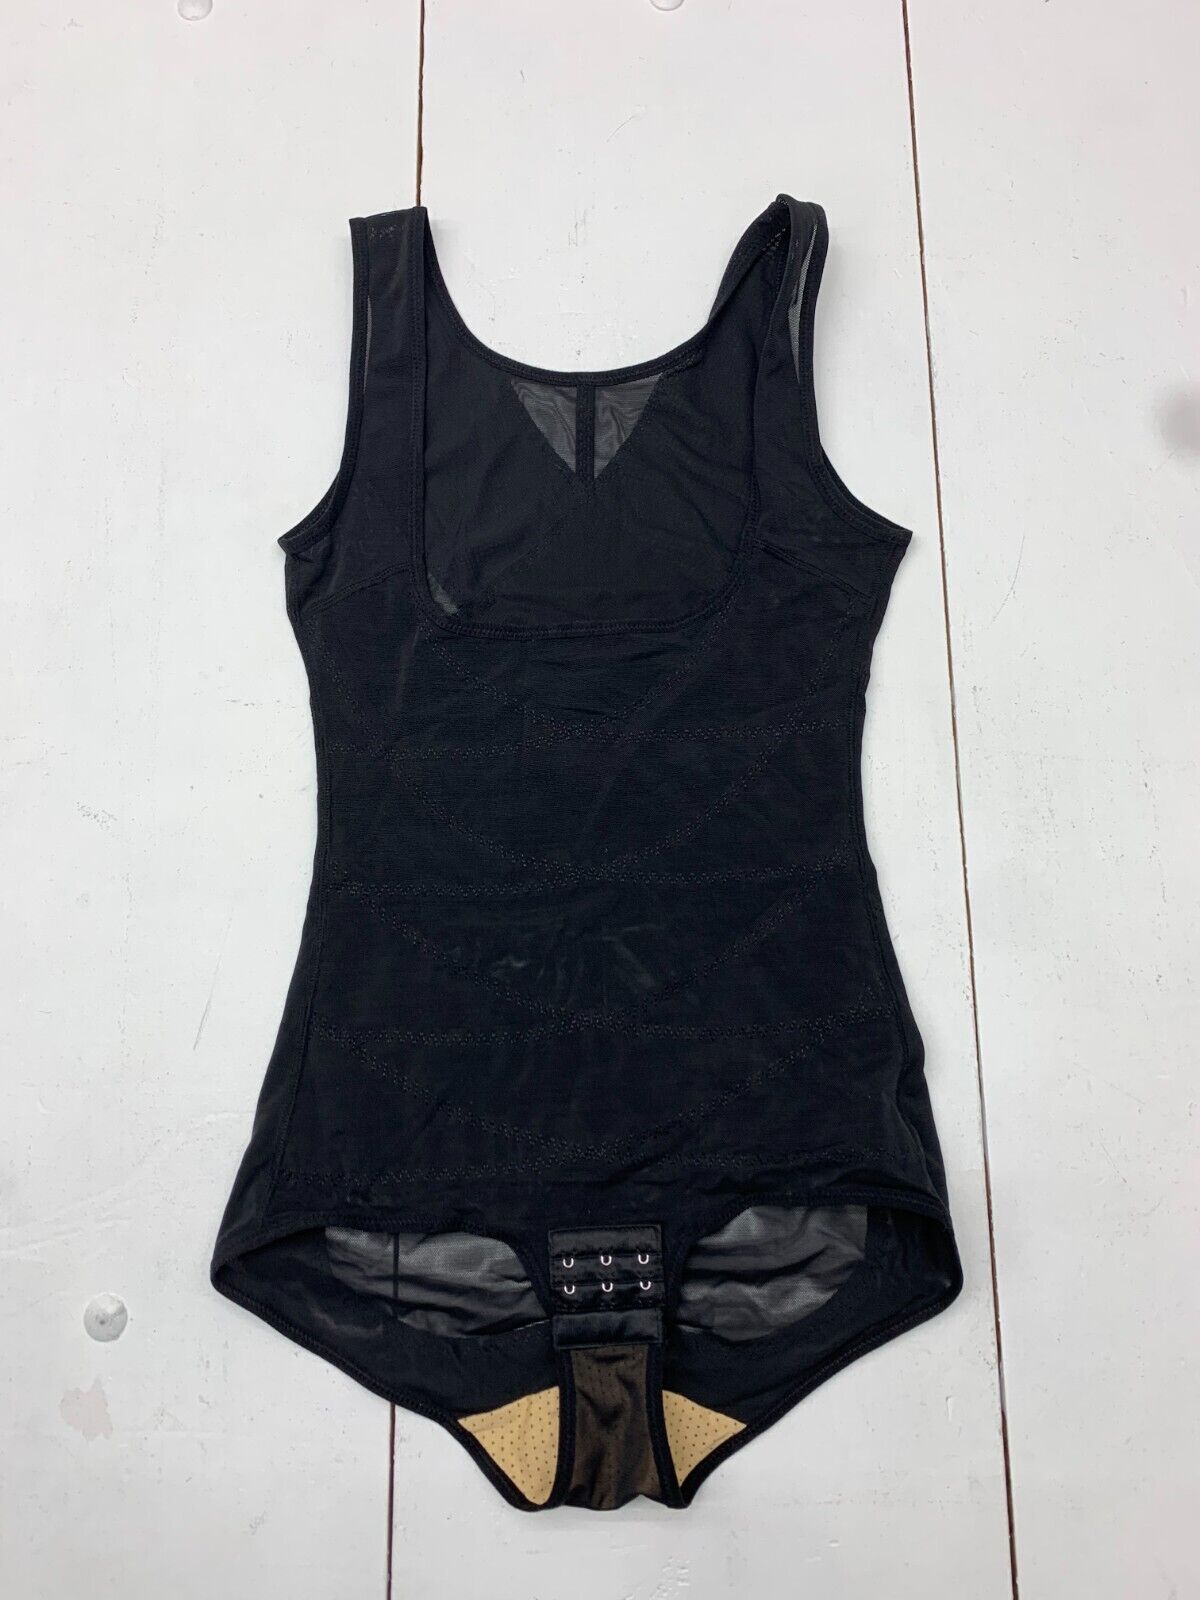 Soho Apparel Womens Black Tank Body Suit One Size - beyond exchange